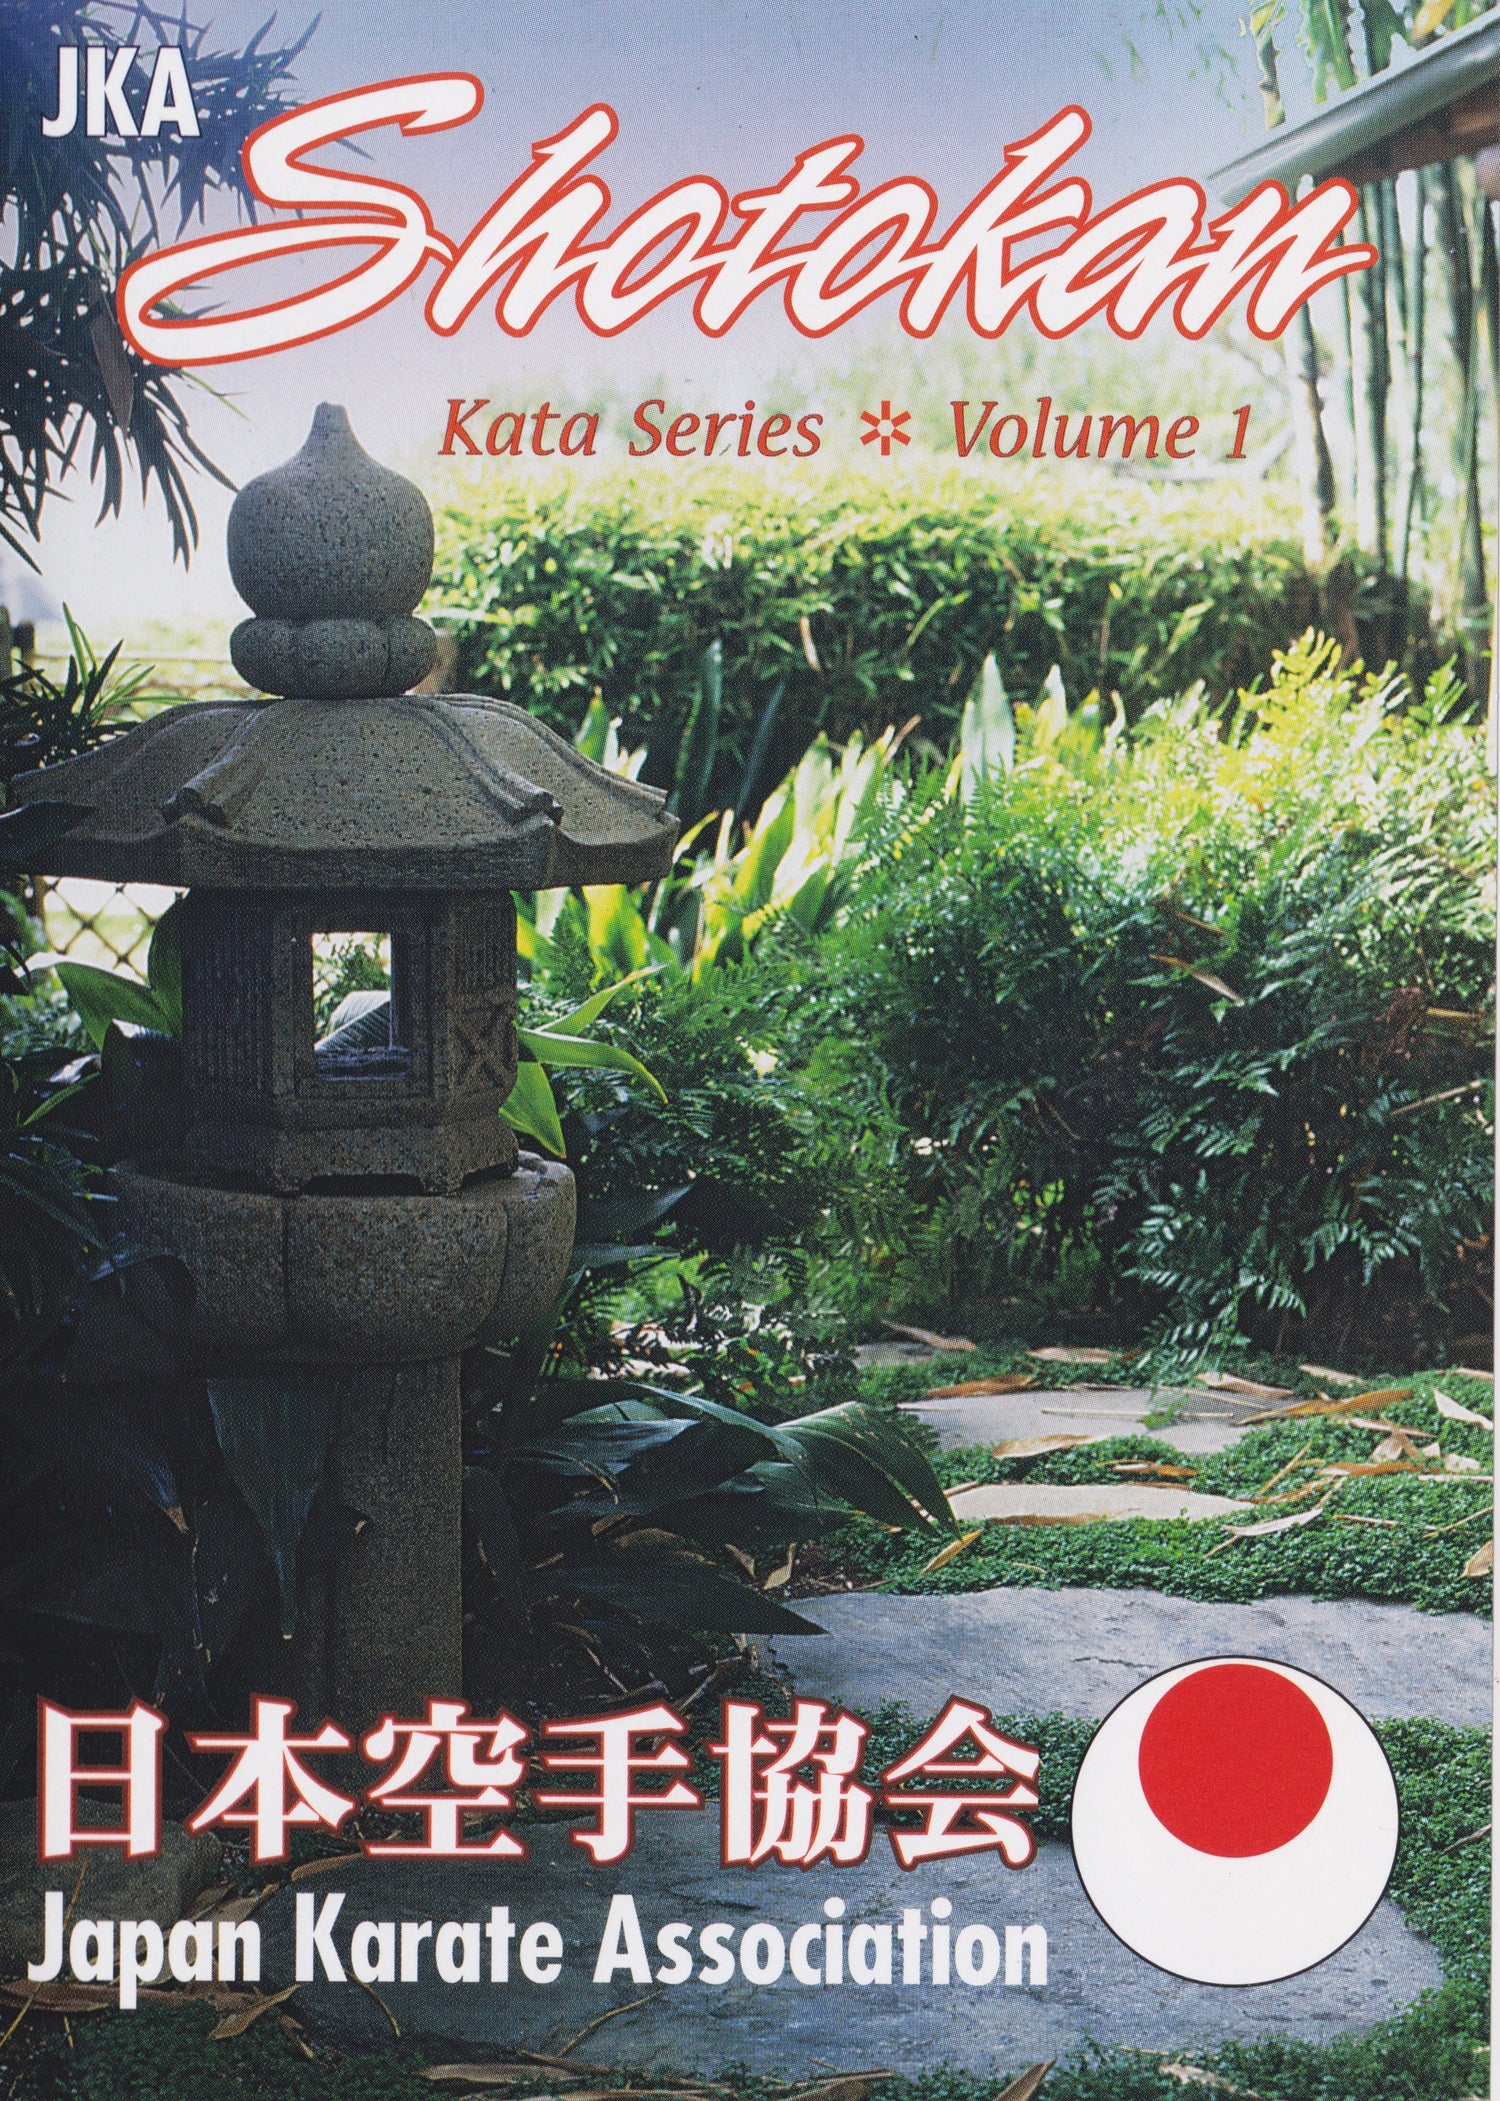 Shotokan Kata Series Vol 1 DVD by Masataoshi Nayama